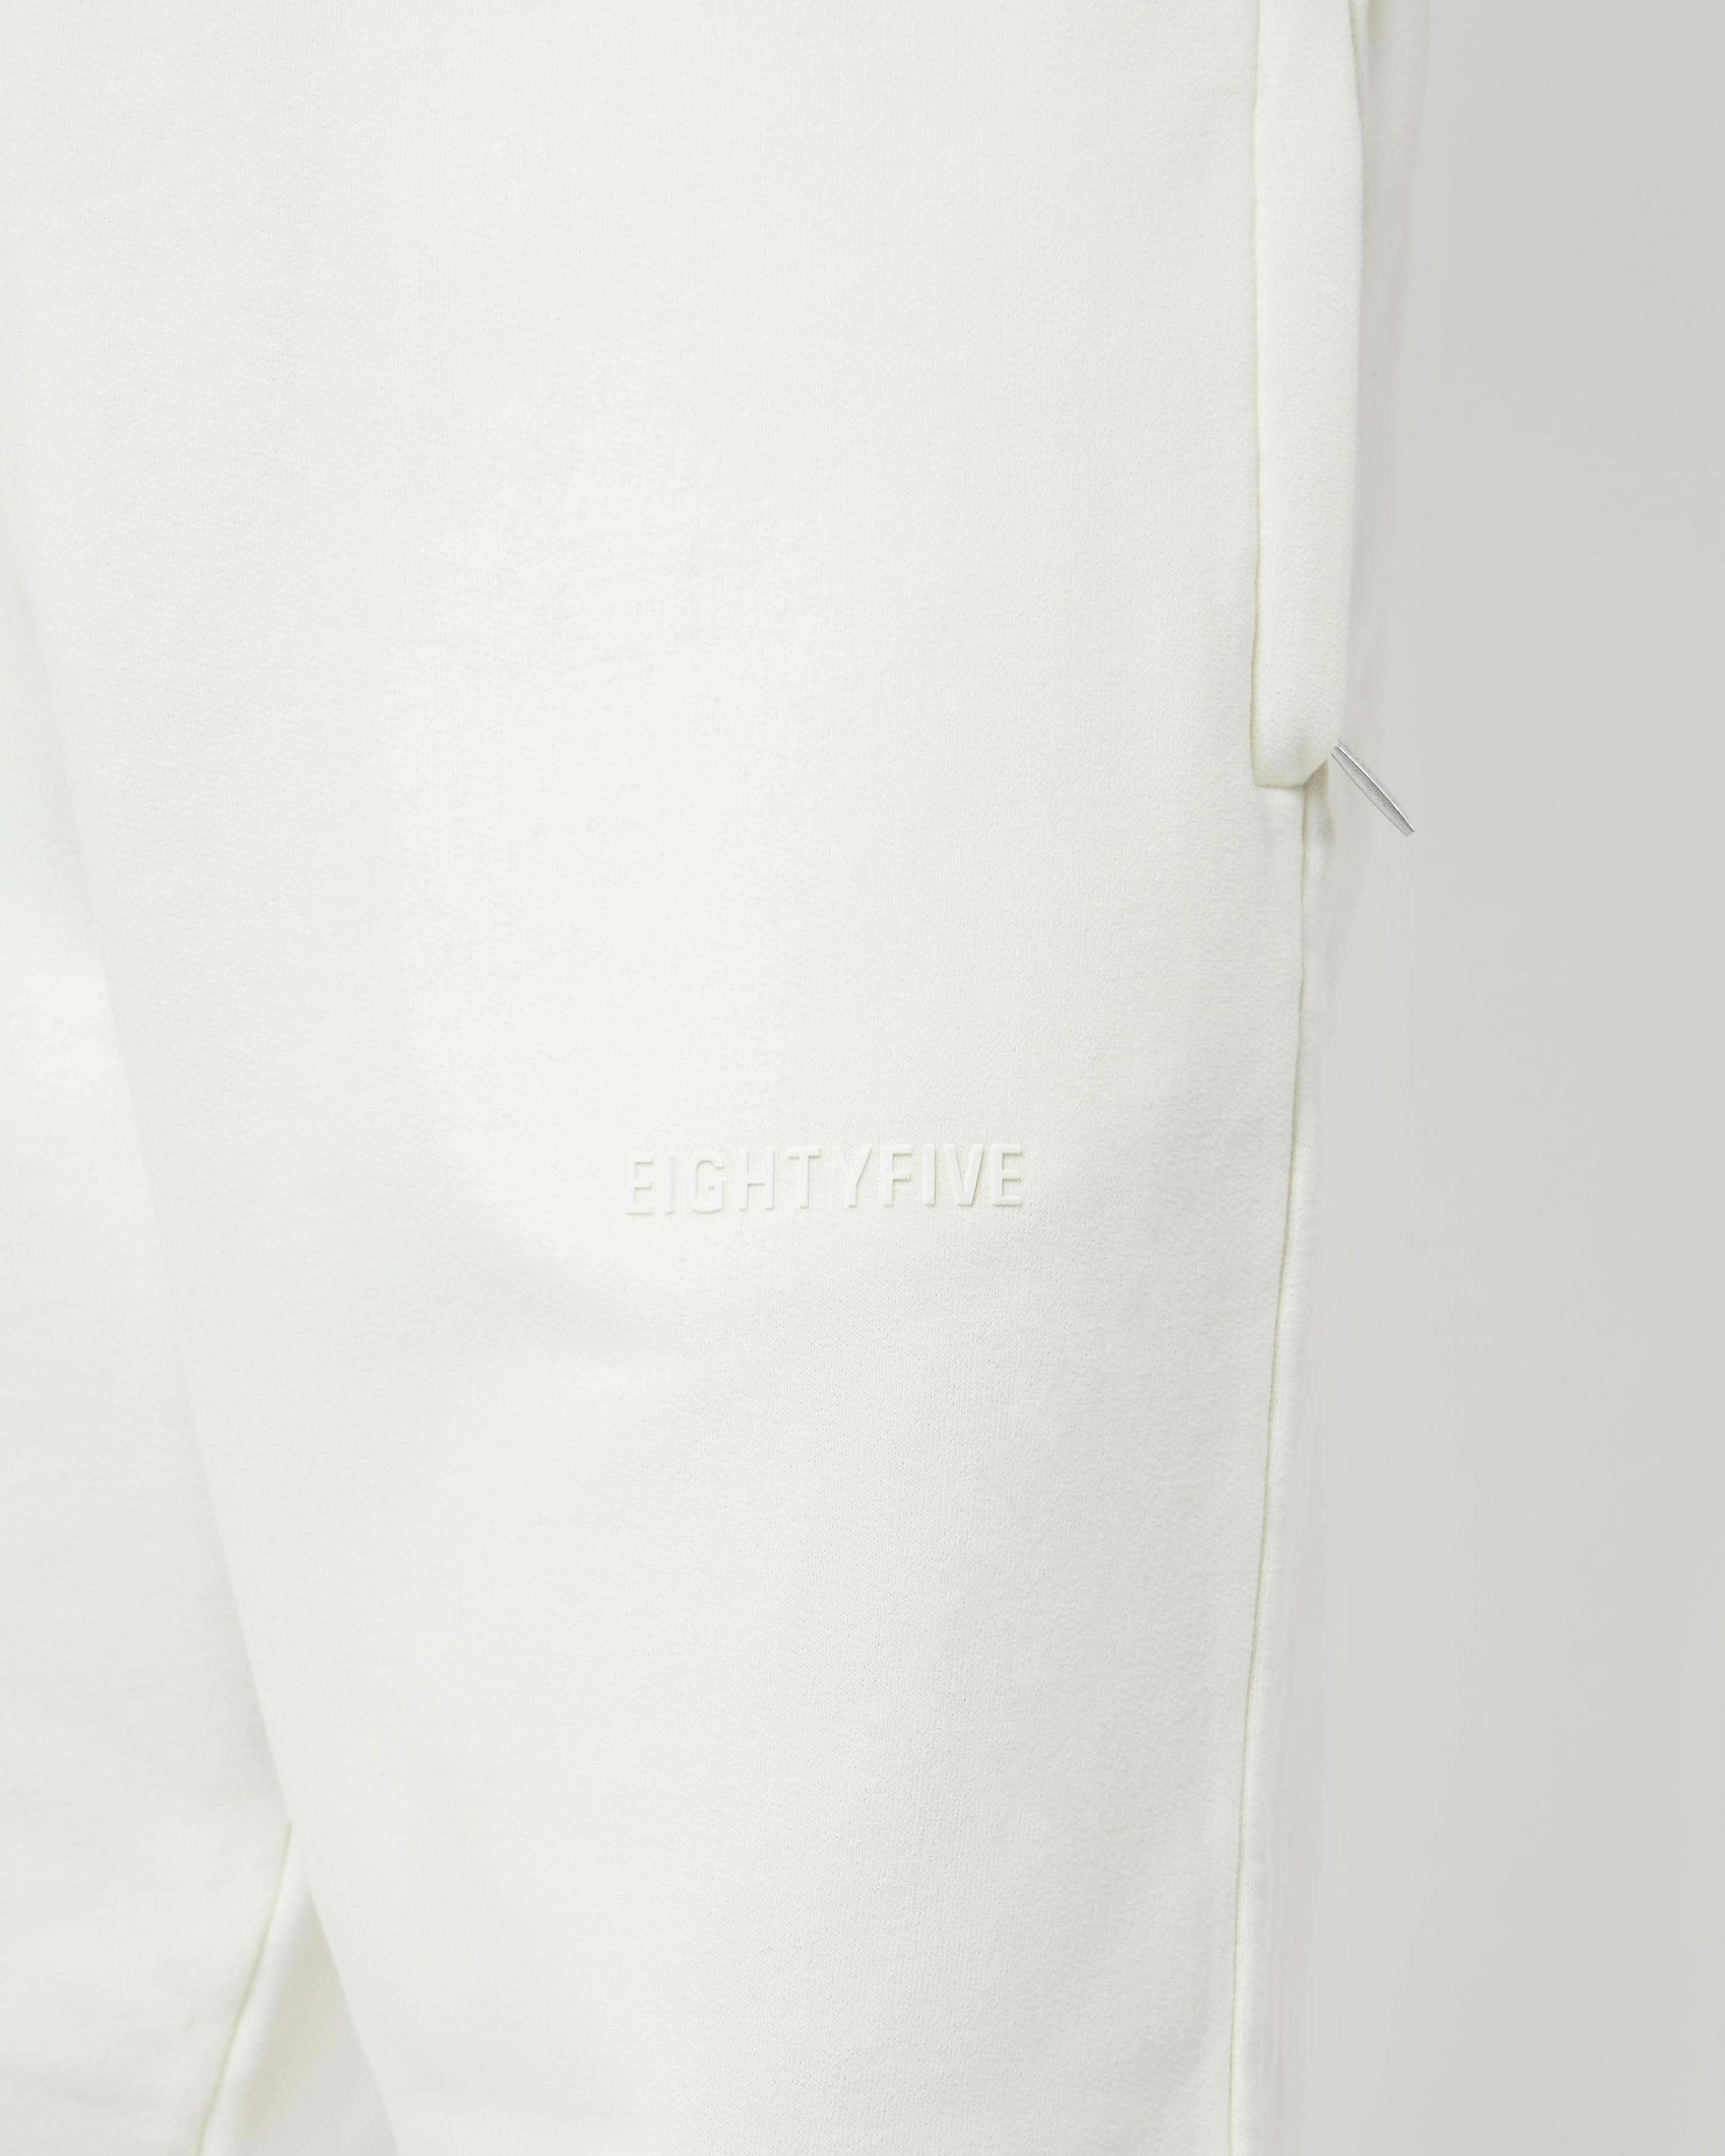 Wide Off White Basic Sweatpants